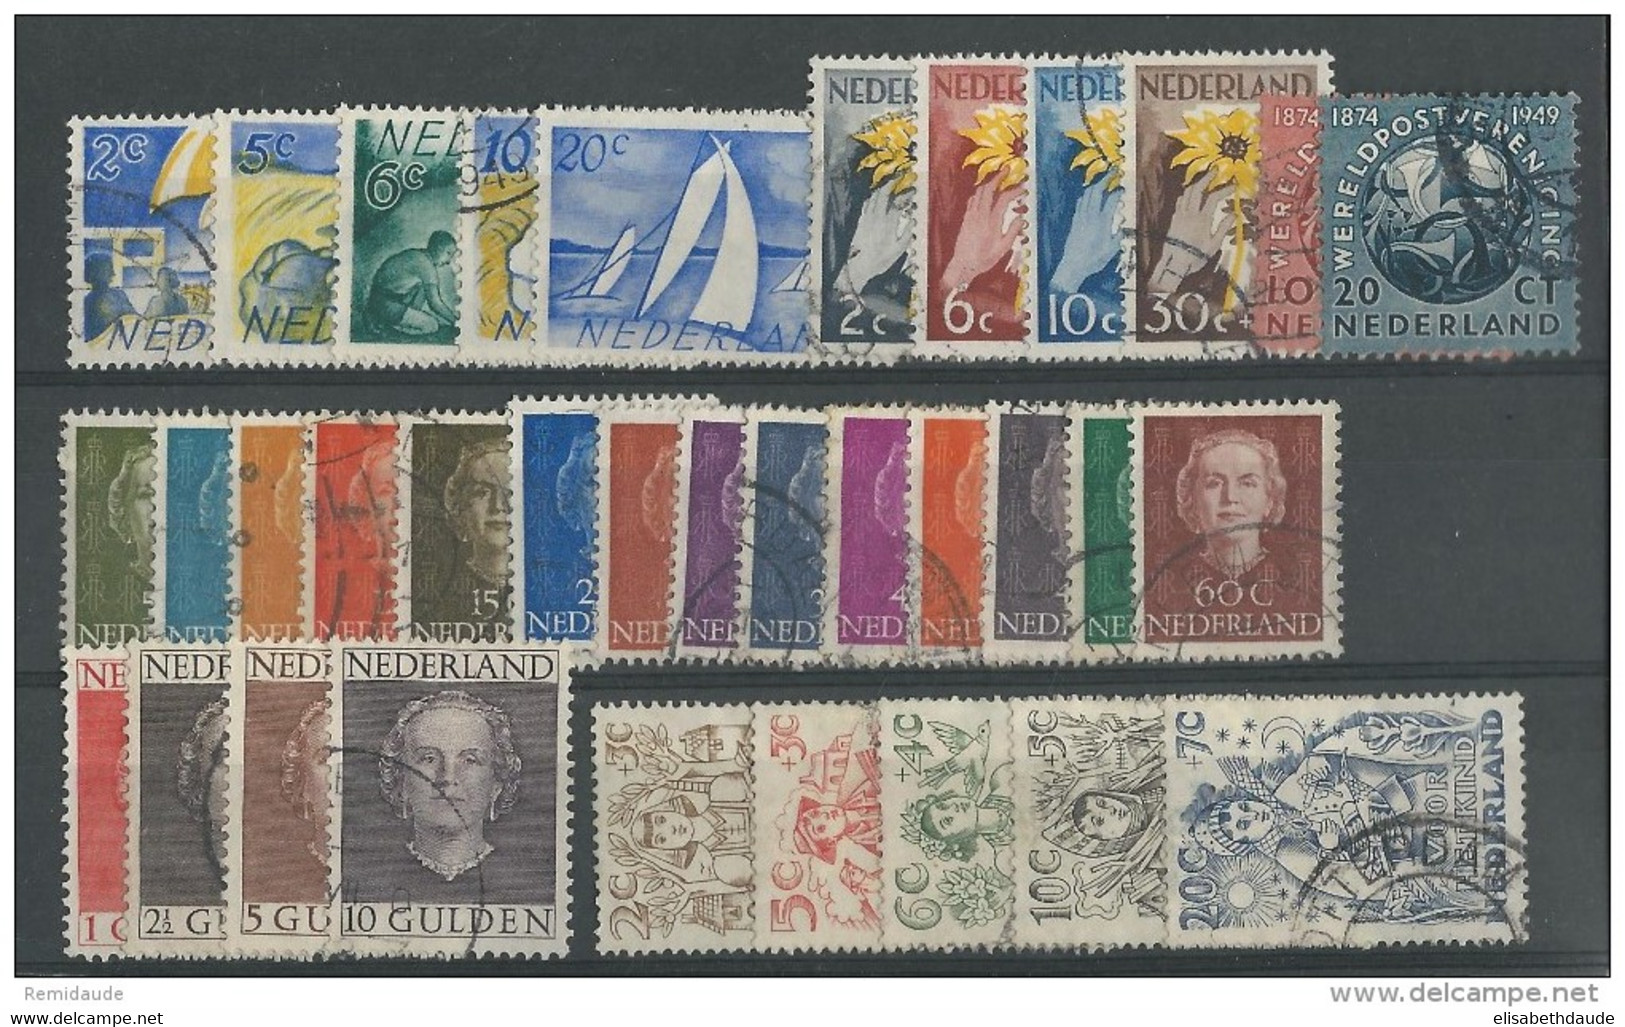 NEDERLAND - 1949 ANNEE COMPLETE - YVERT N° 504/534 OBLITERES - COTE = 61 EUROS - Annate Complete